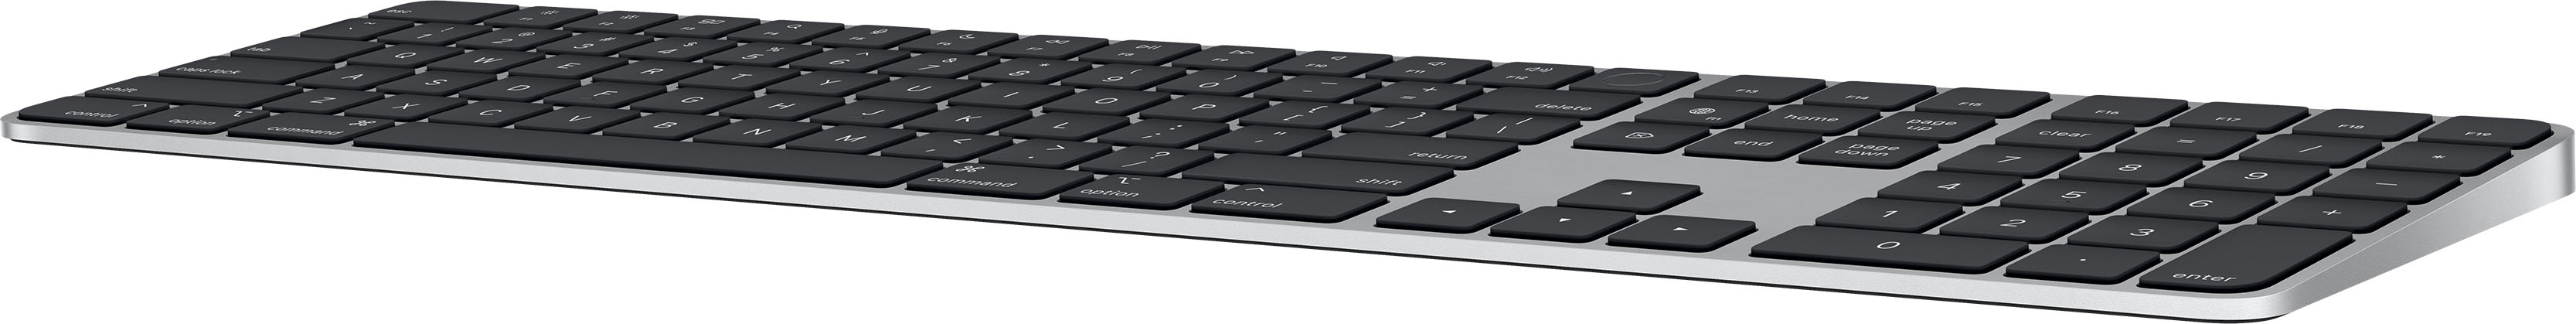 Magic Keyboard with Numeric Keypad for Mac models - Apple